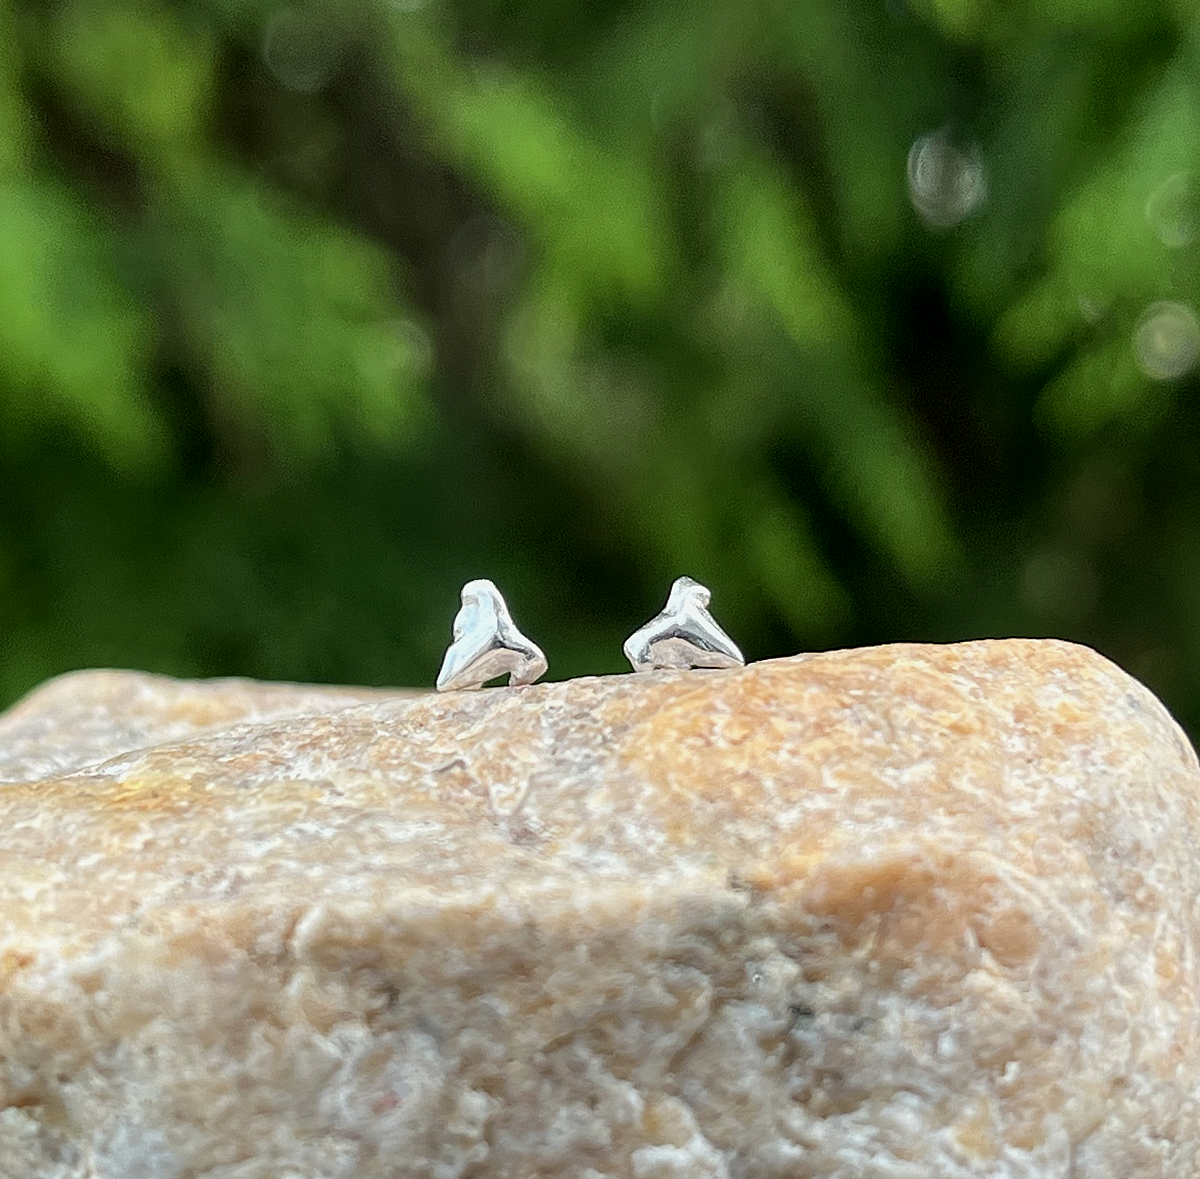 sterling silver kitten tooth stud earrings on a piece of granite